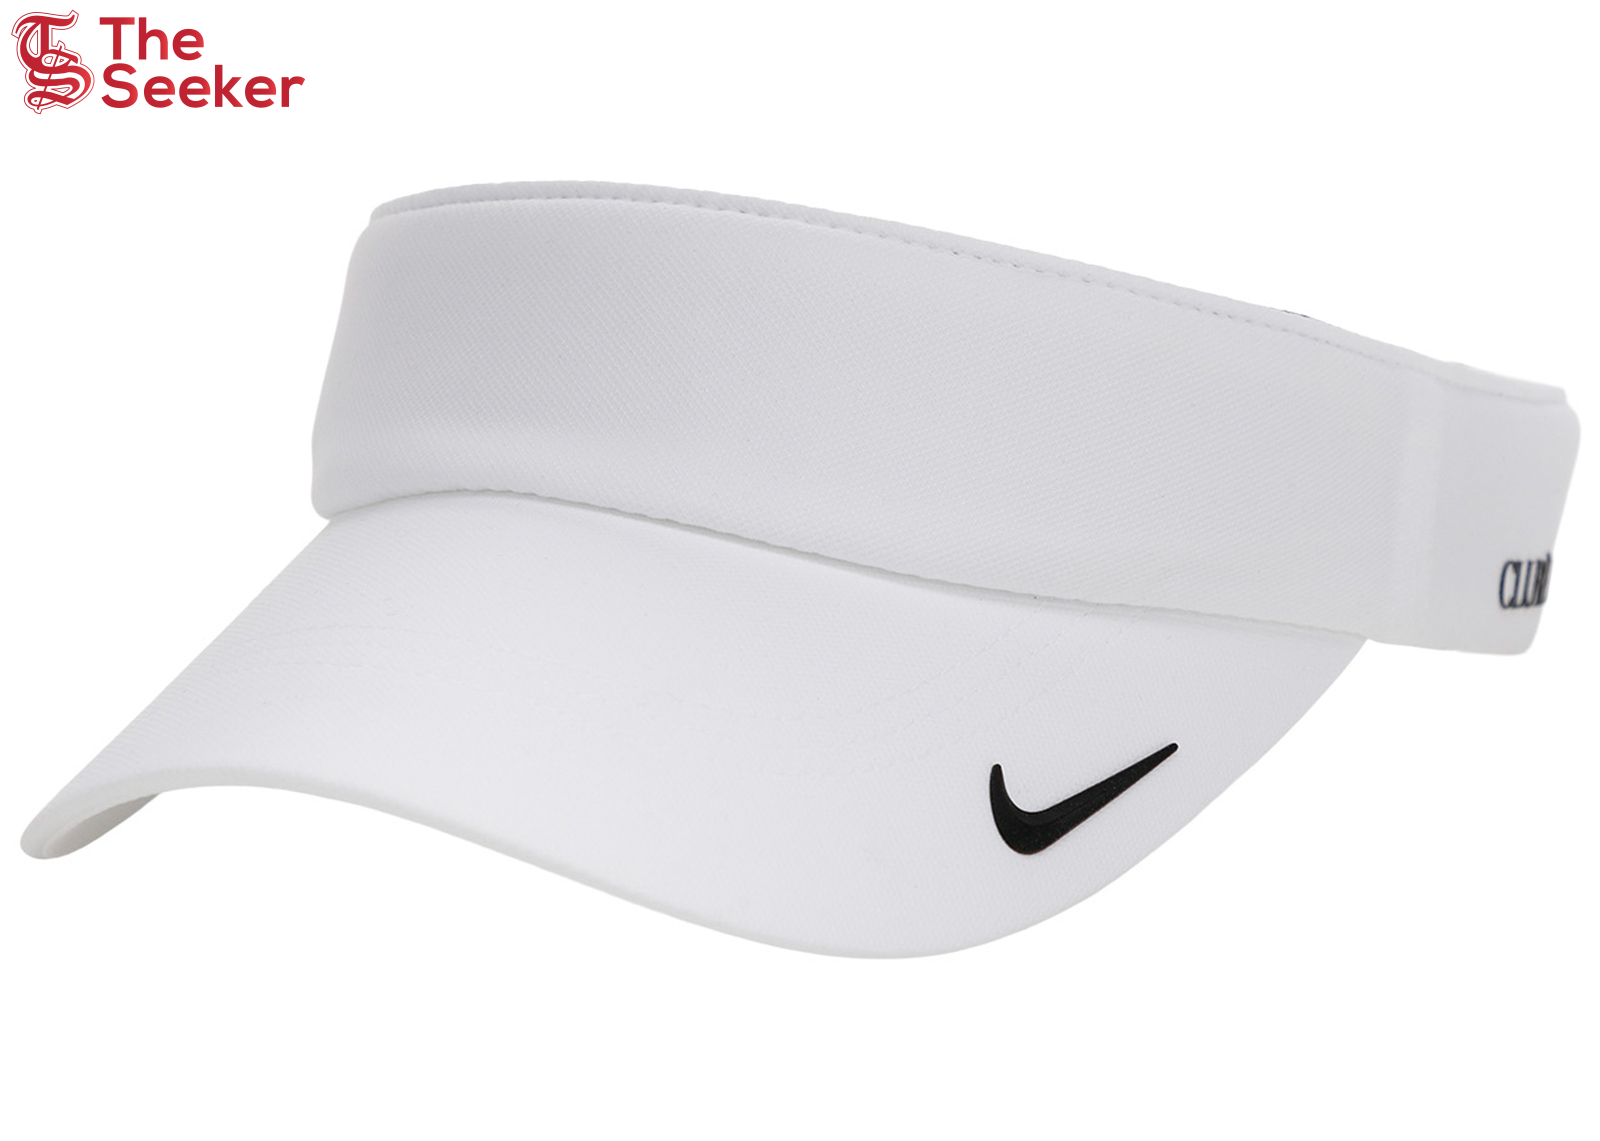 Nike x Drake NOCTA Golf Visor White